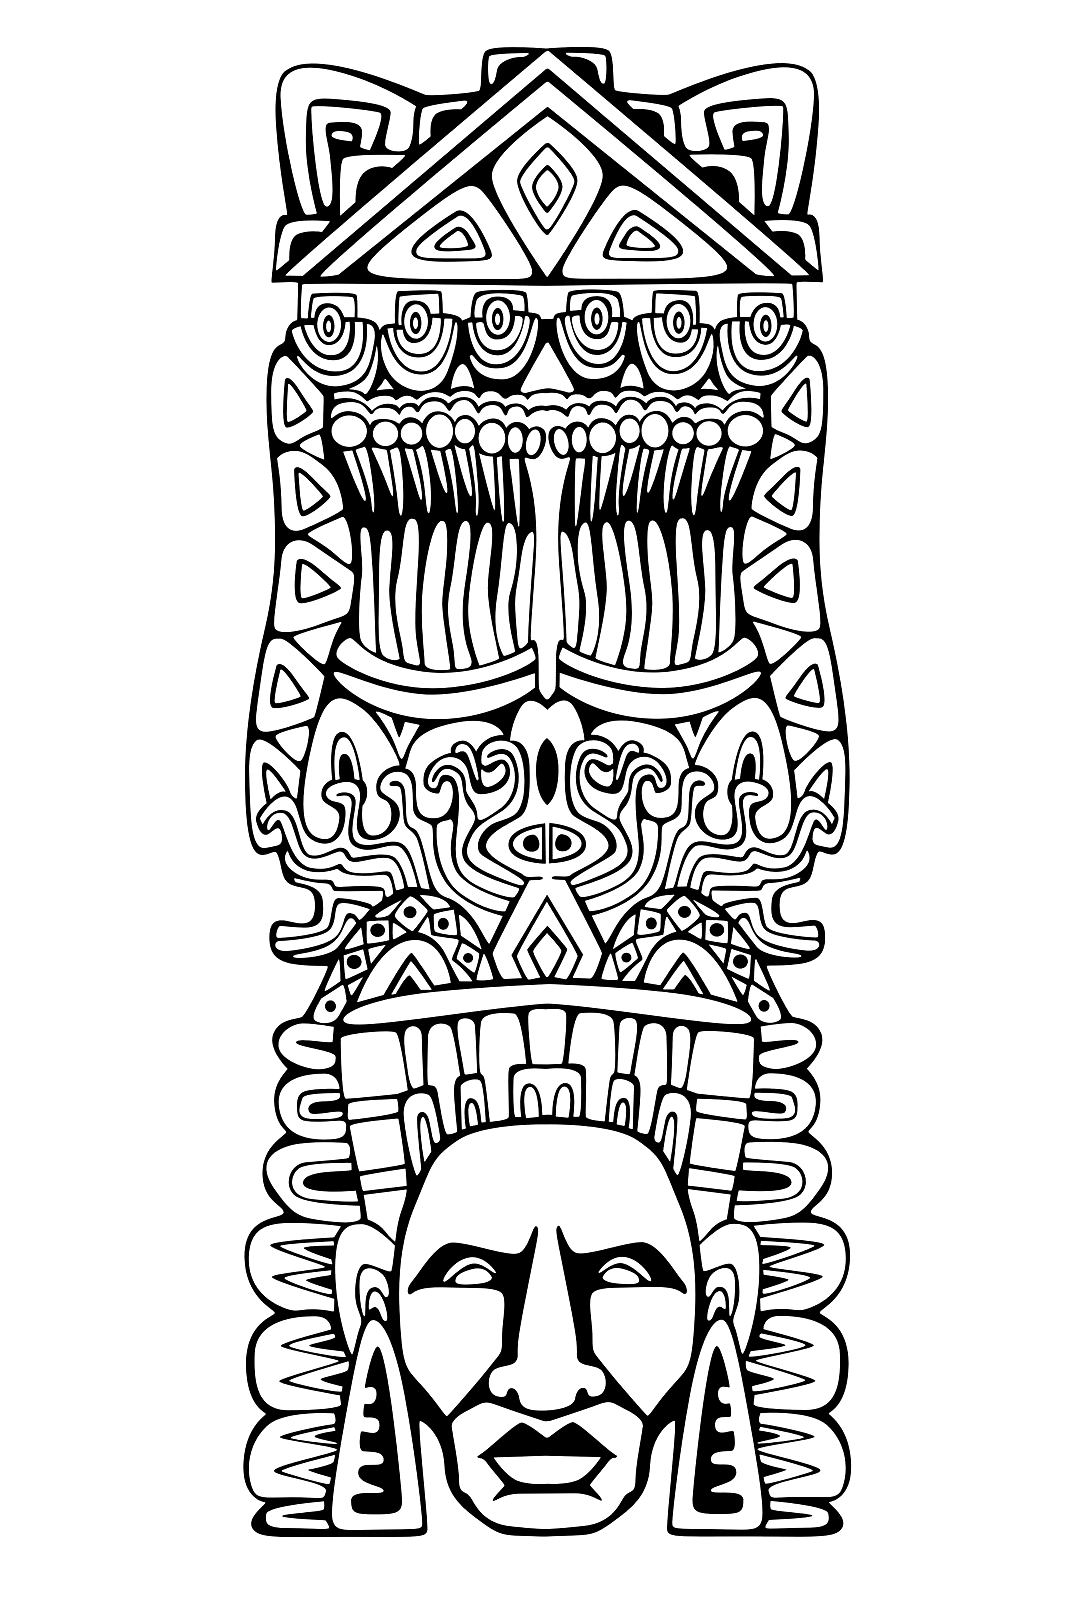 Colorear para adultos : Mayas, Aztecas e Incas - 6, Artista : Rocich   Origen : 123rf